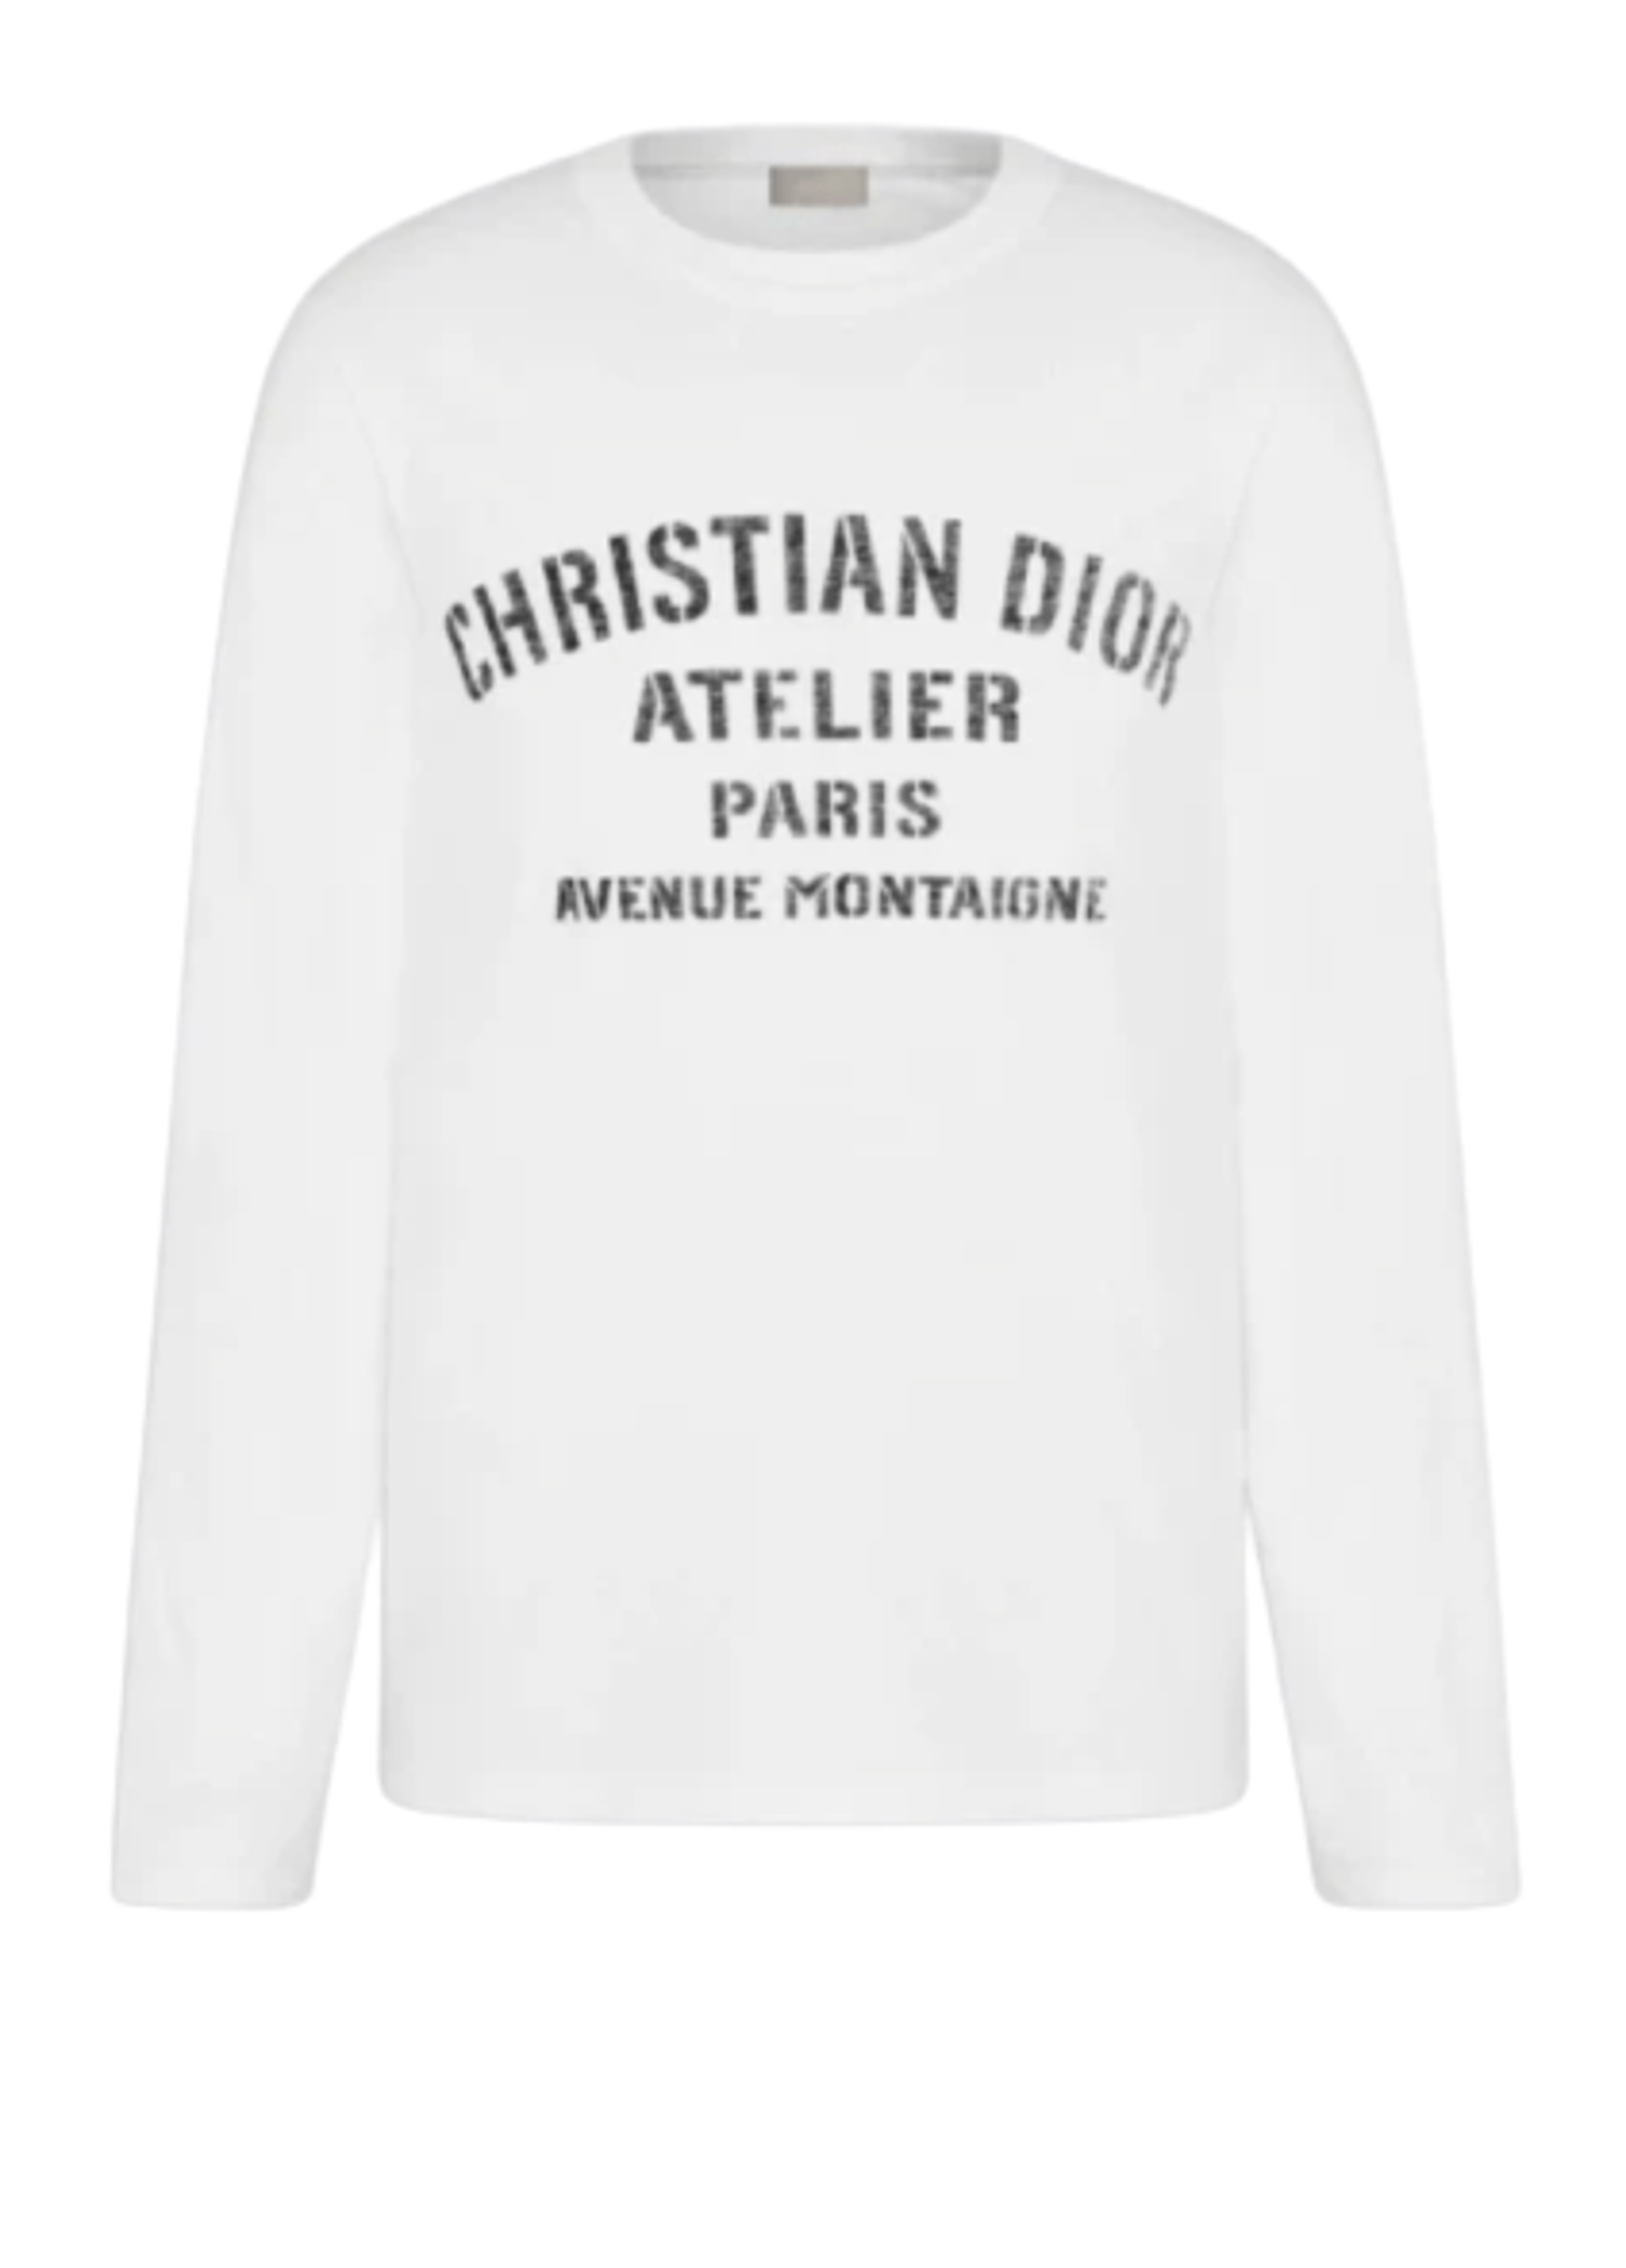 Dior Atelier Long Sleeve Tee Shirt White